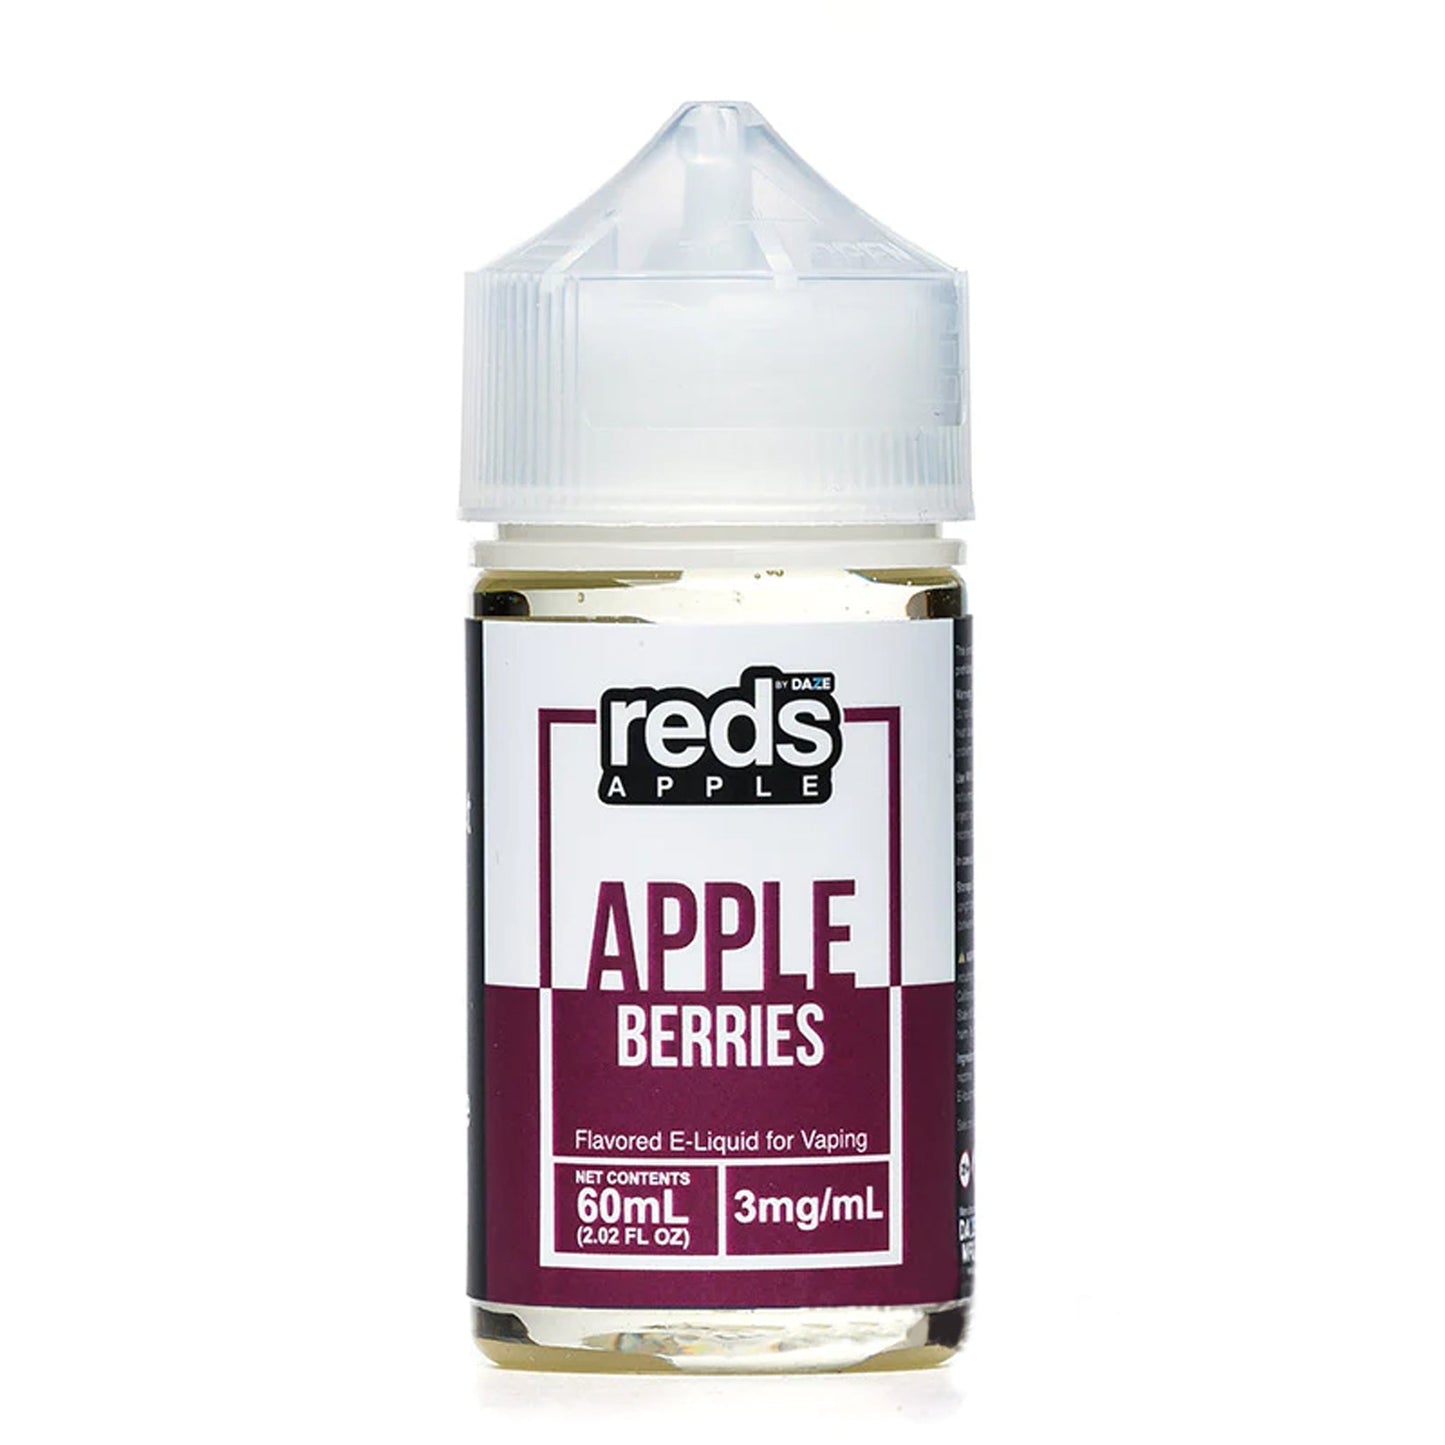 7 Daze Reds Apple 60ML - Berries Apple - Mobs Enterprise